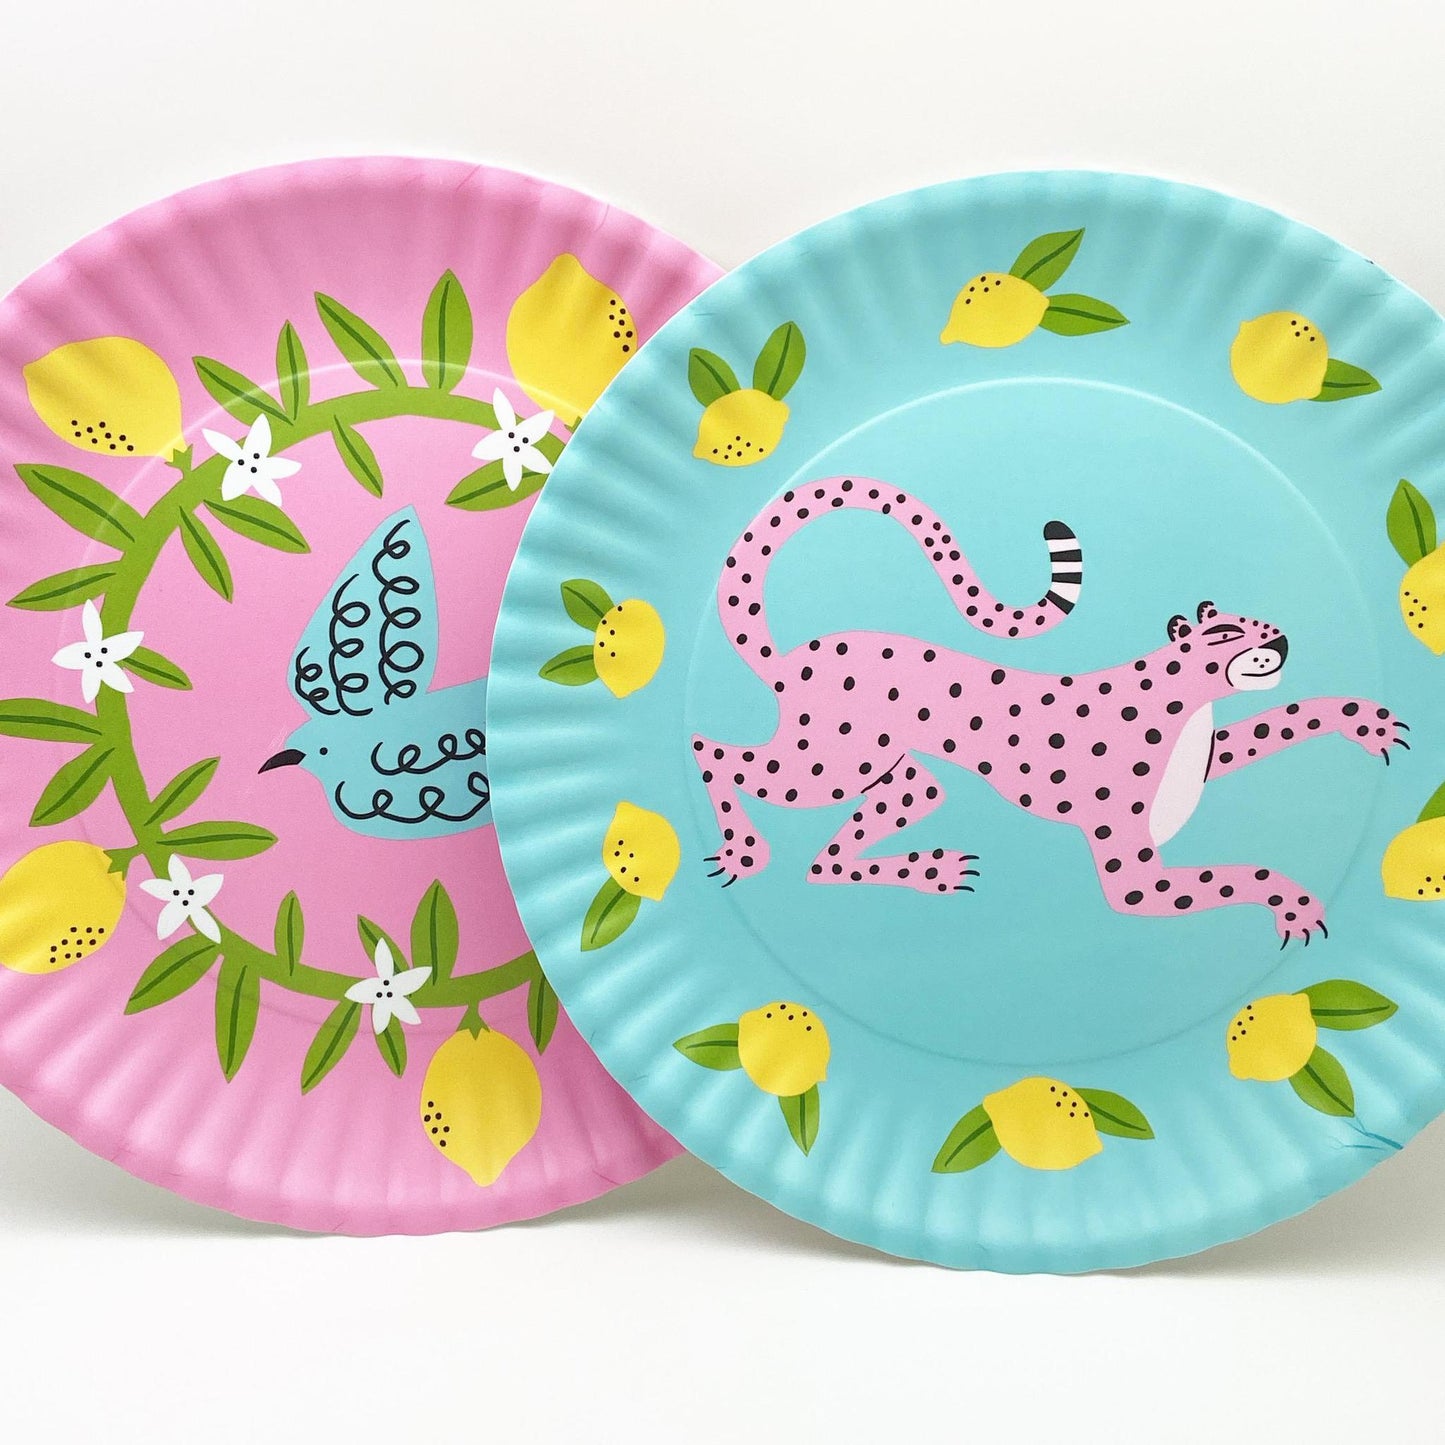 Platter - "Paper Plate" Melamine - Leopard